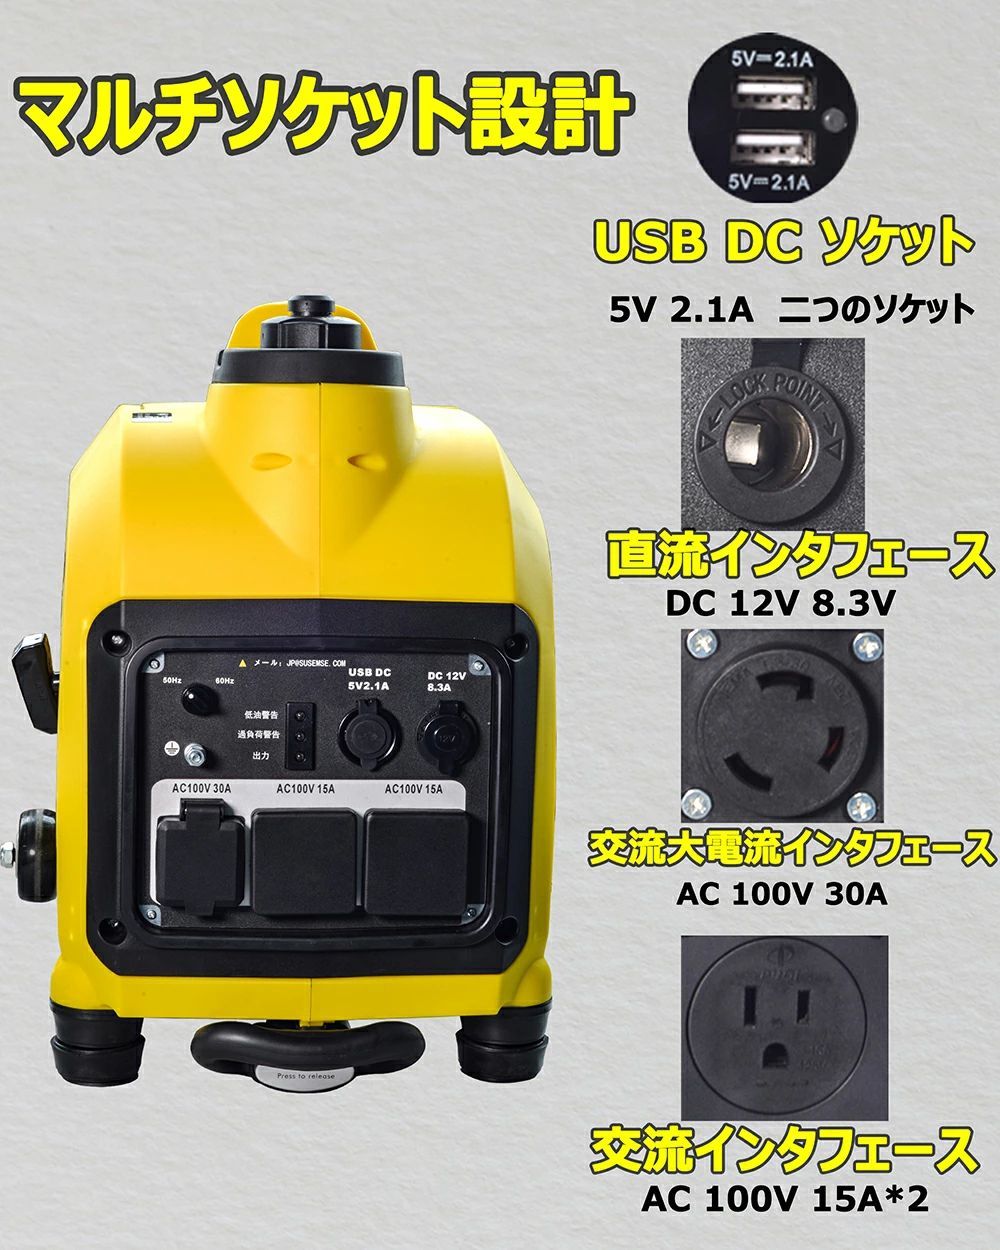 Black Friday SaleYUKATO インバーター発電機 定格出力1.6kVA 50Hz 60Hz切替 小型発電機 家庭用 正弦波